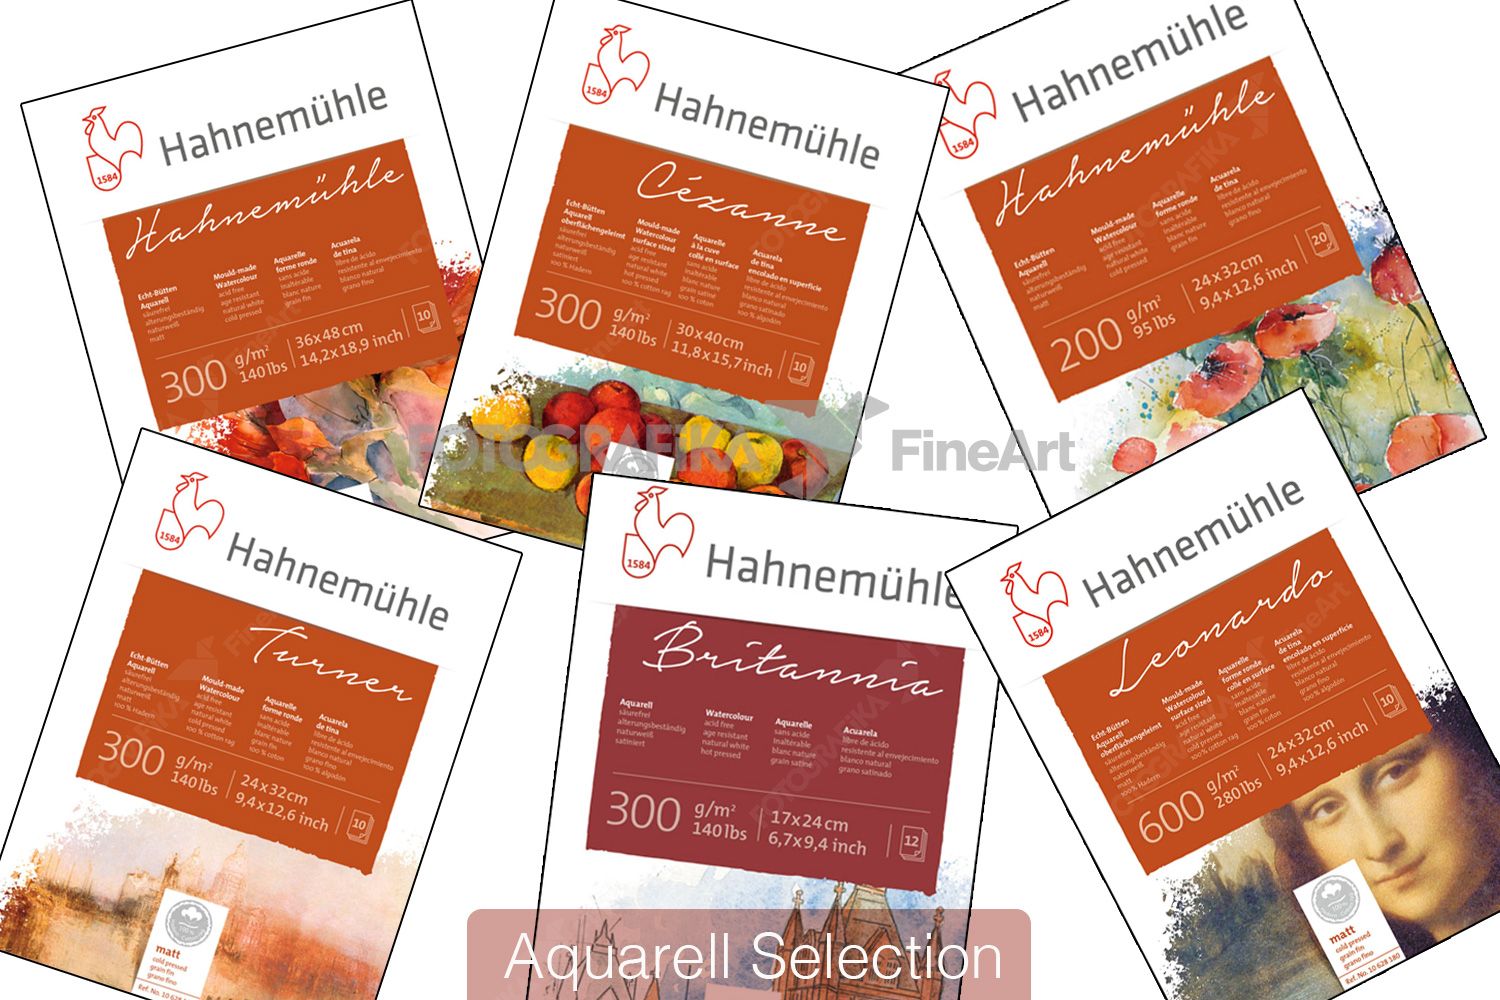 Hahnemühle, Aquarell Selection 200-600 gsm Ped (12 farklı kağıt)